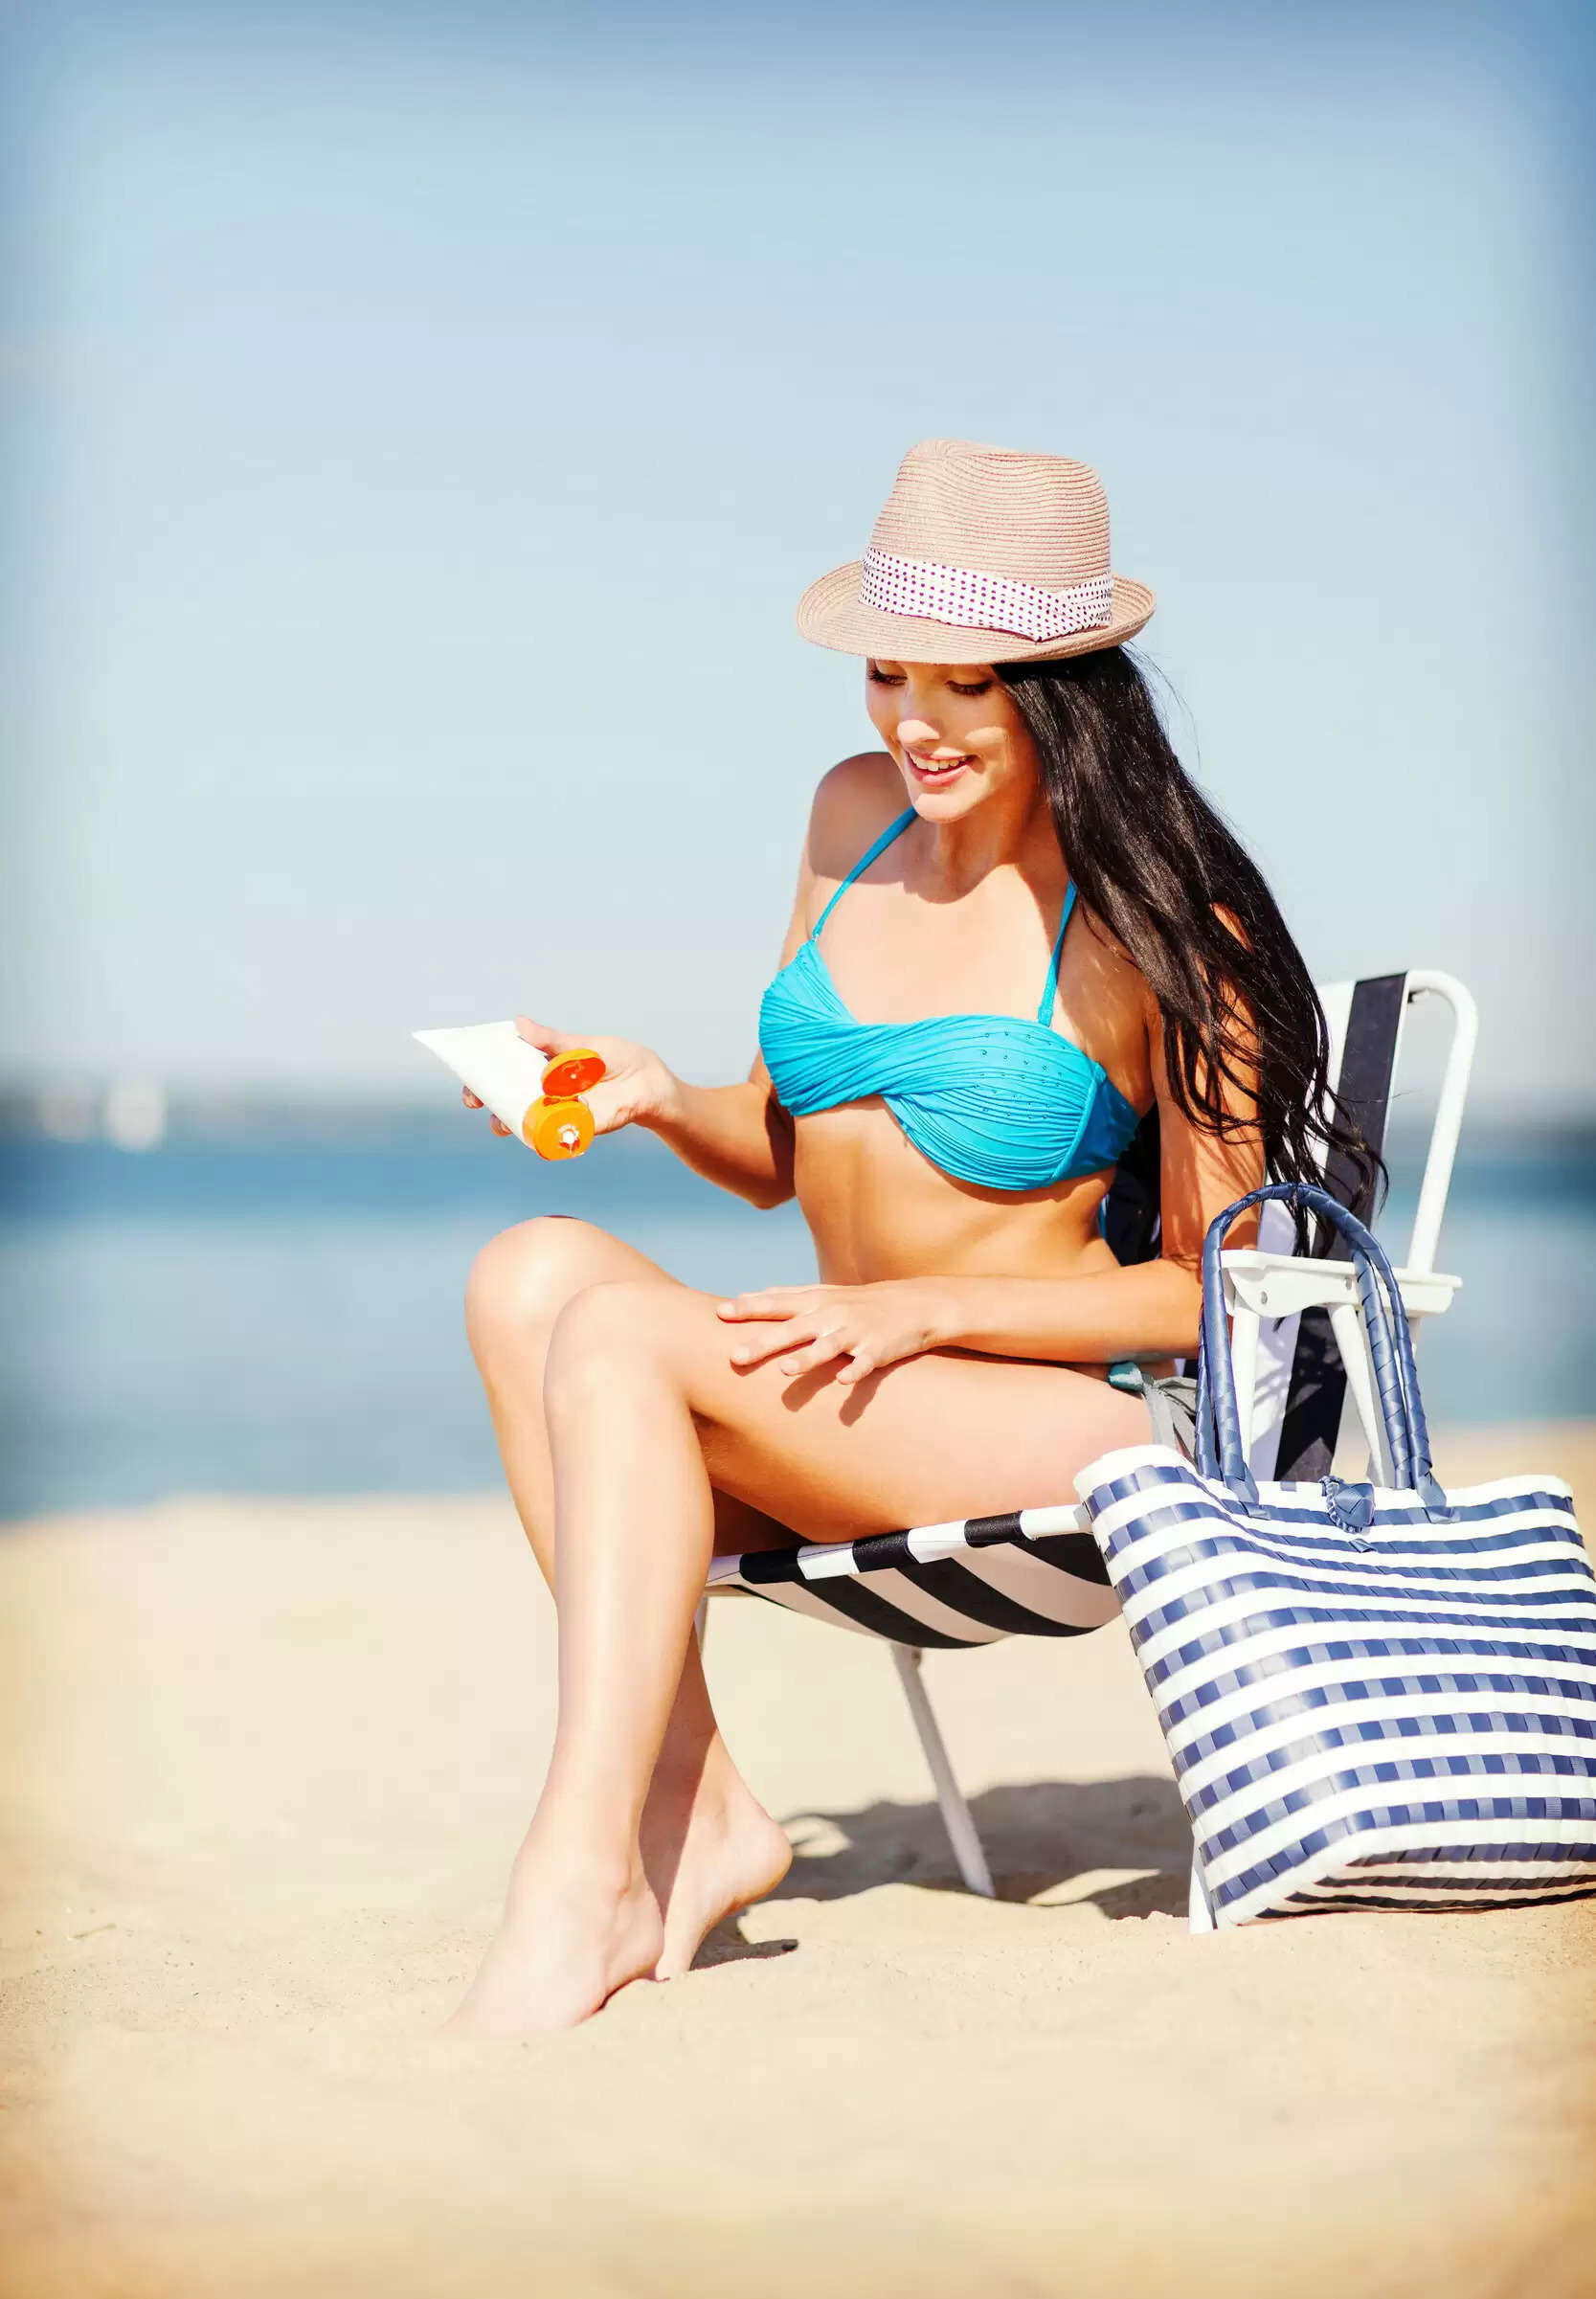 Summer Heat: Best Ways To Apply Sunscreen